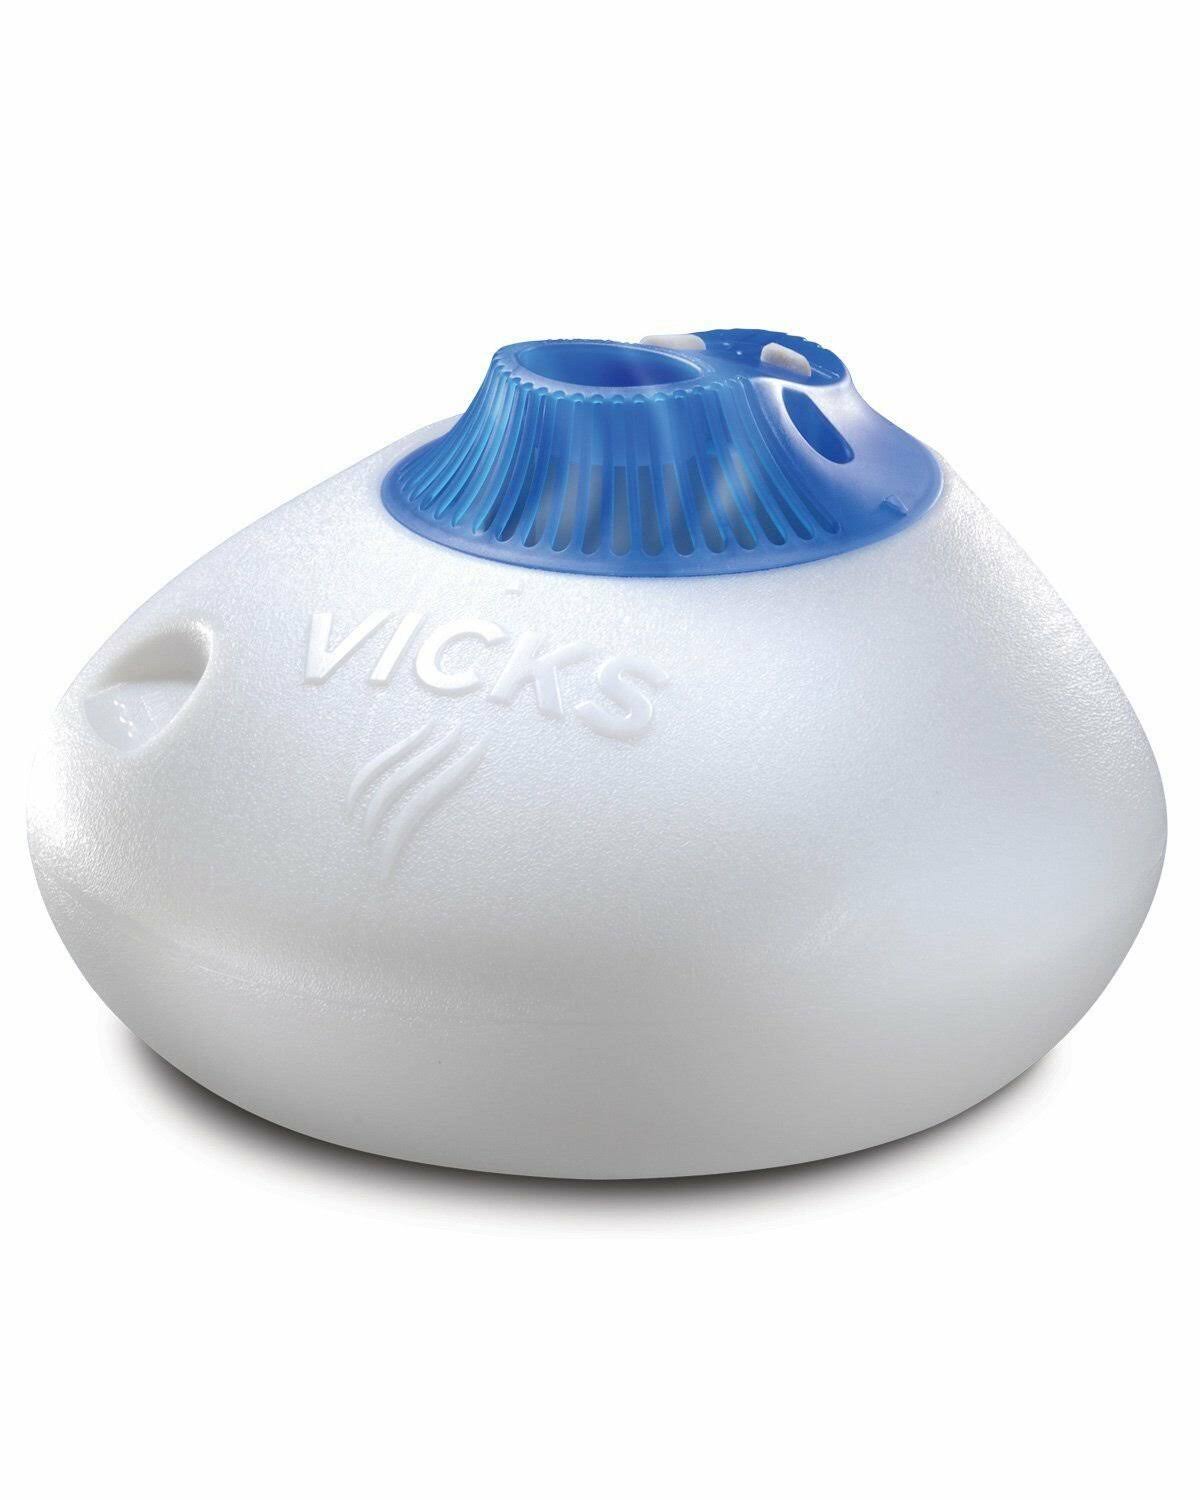 Vicks Warm Steam Vaporizer - White, Blue, Small to Medium Room, 1.5 Gallon